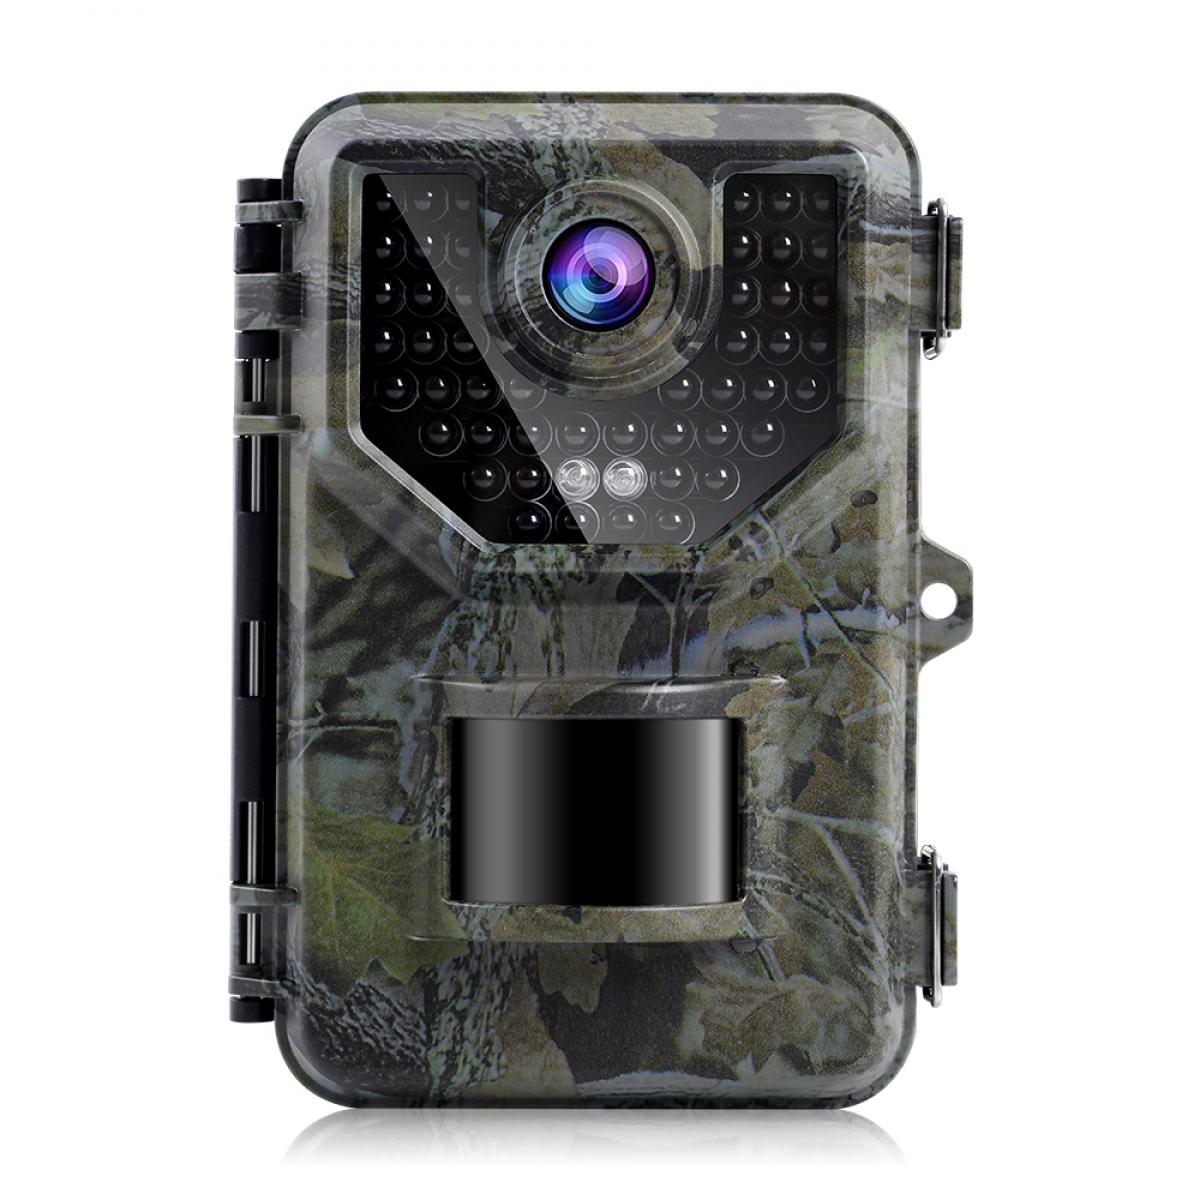 K&F HB-E2 Hunting Camera Scouting Camera Wild View 1080P 16MP HD PIR Motion Night Vision Camera